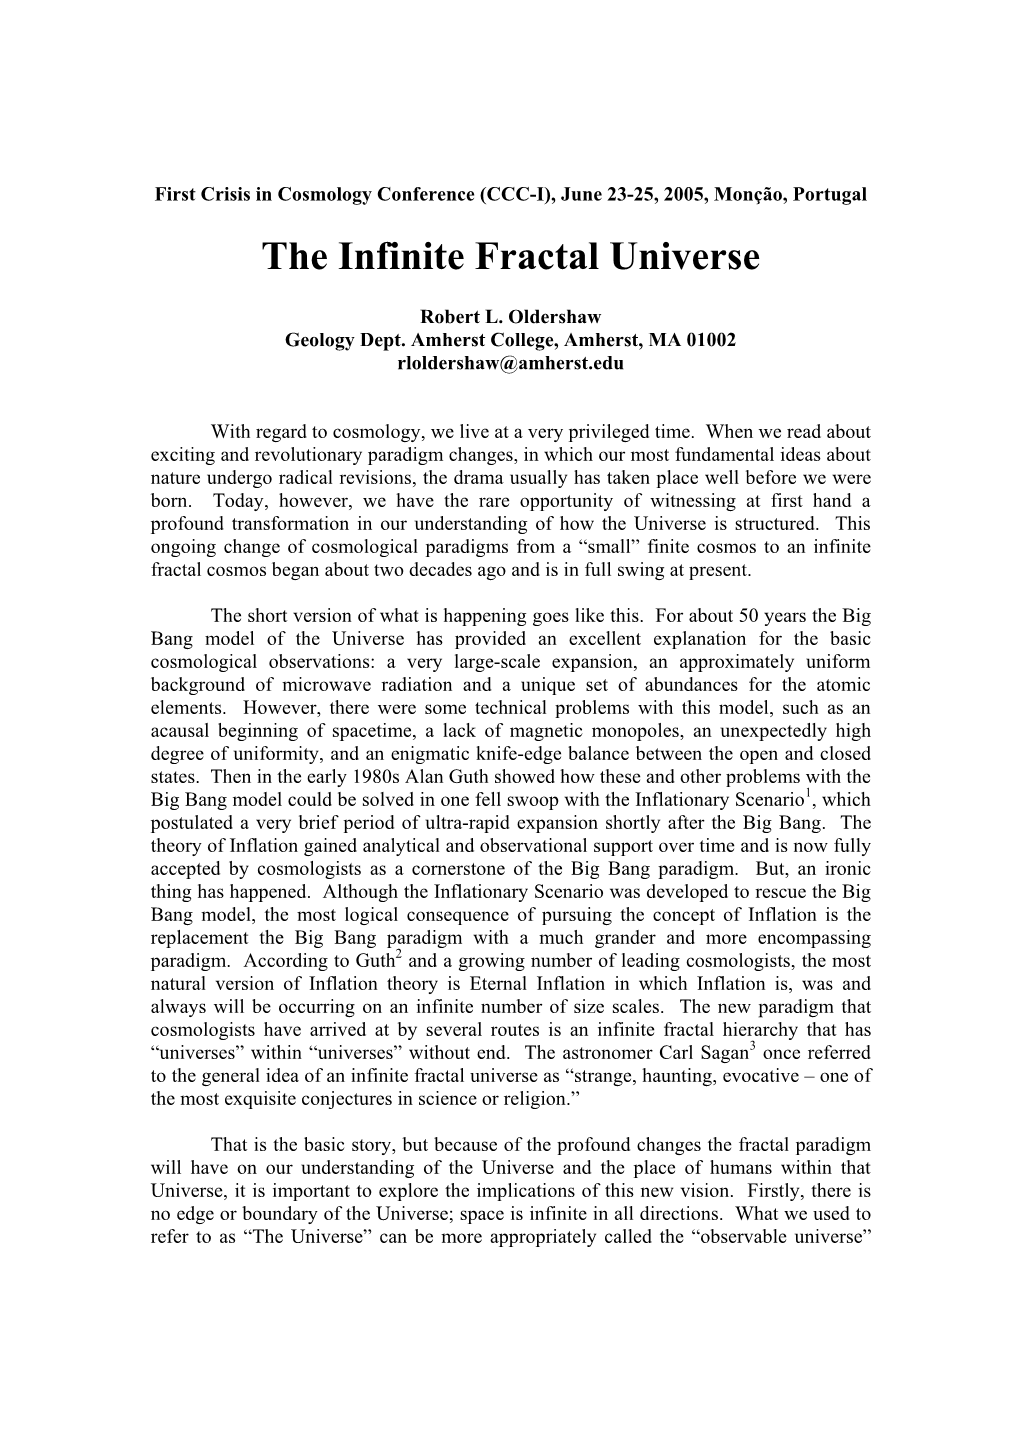 50. the Infinite Fractal Universe (June 2005)